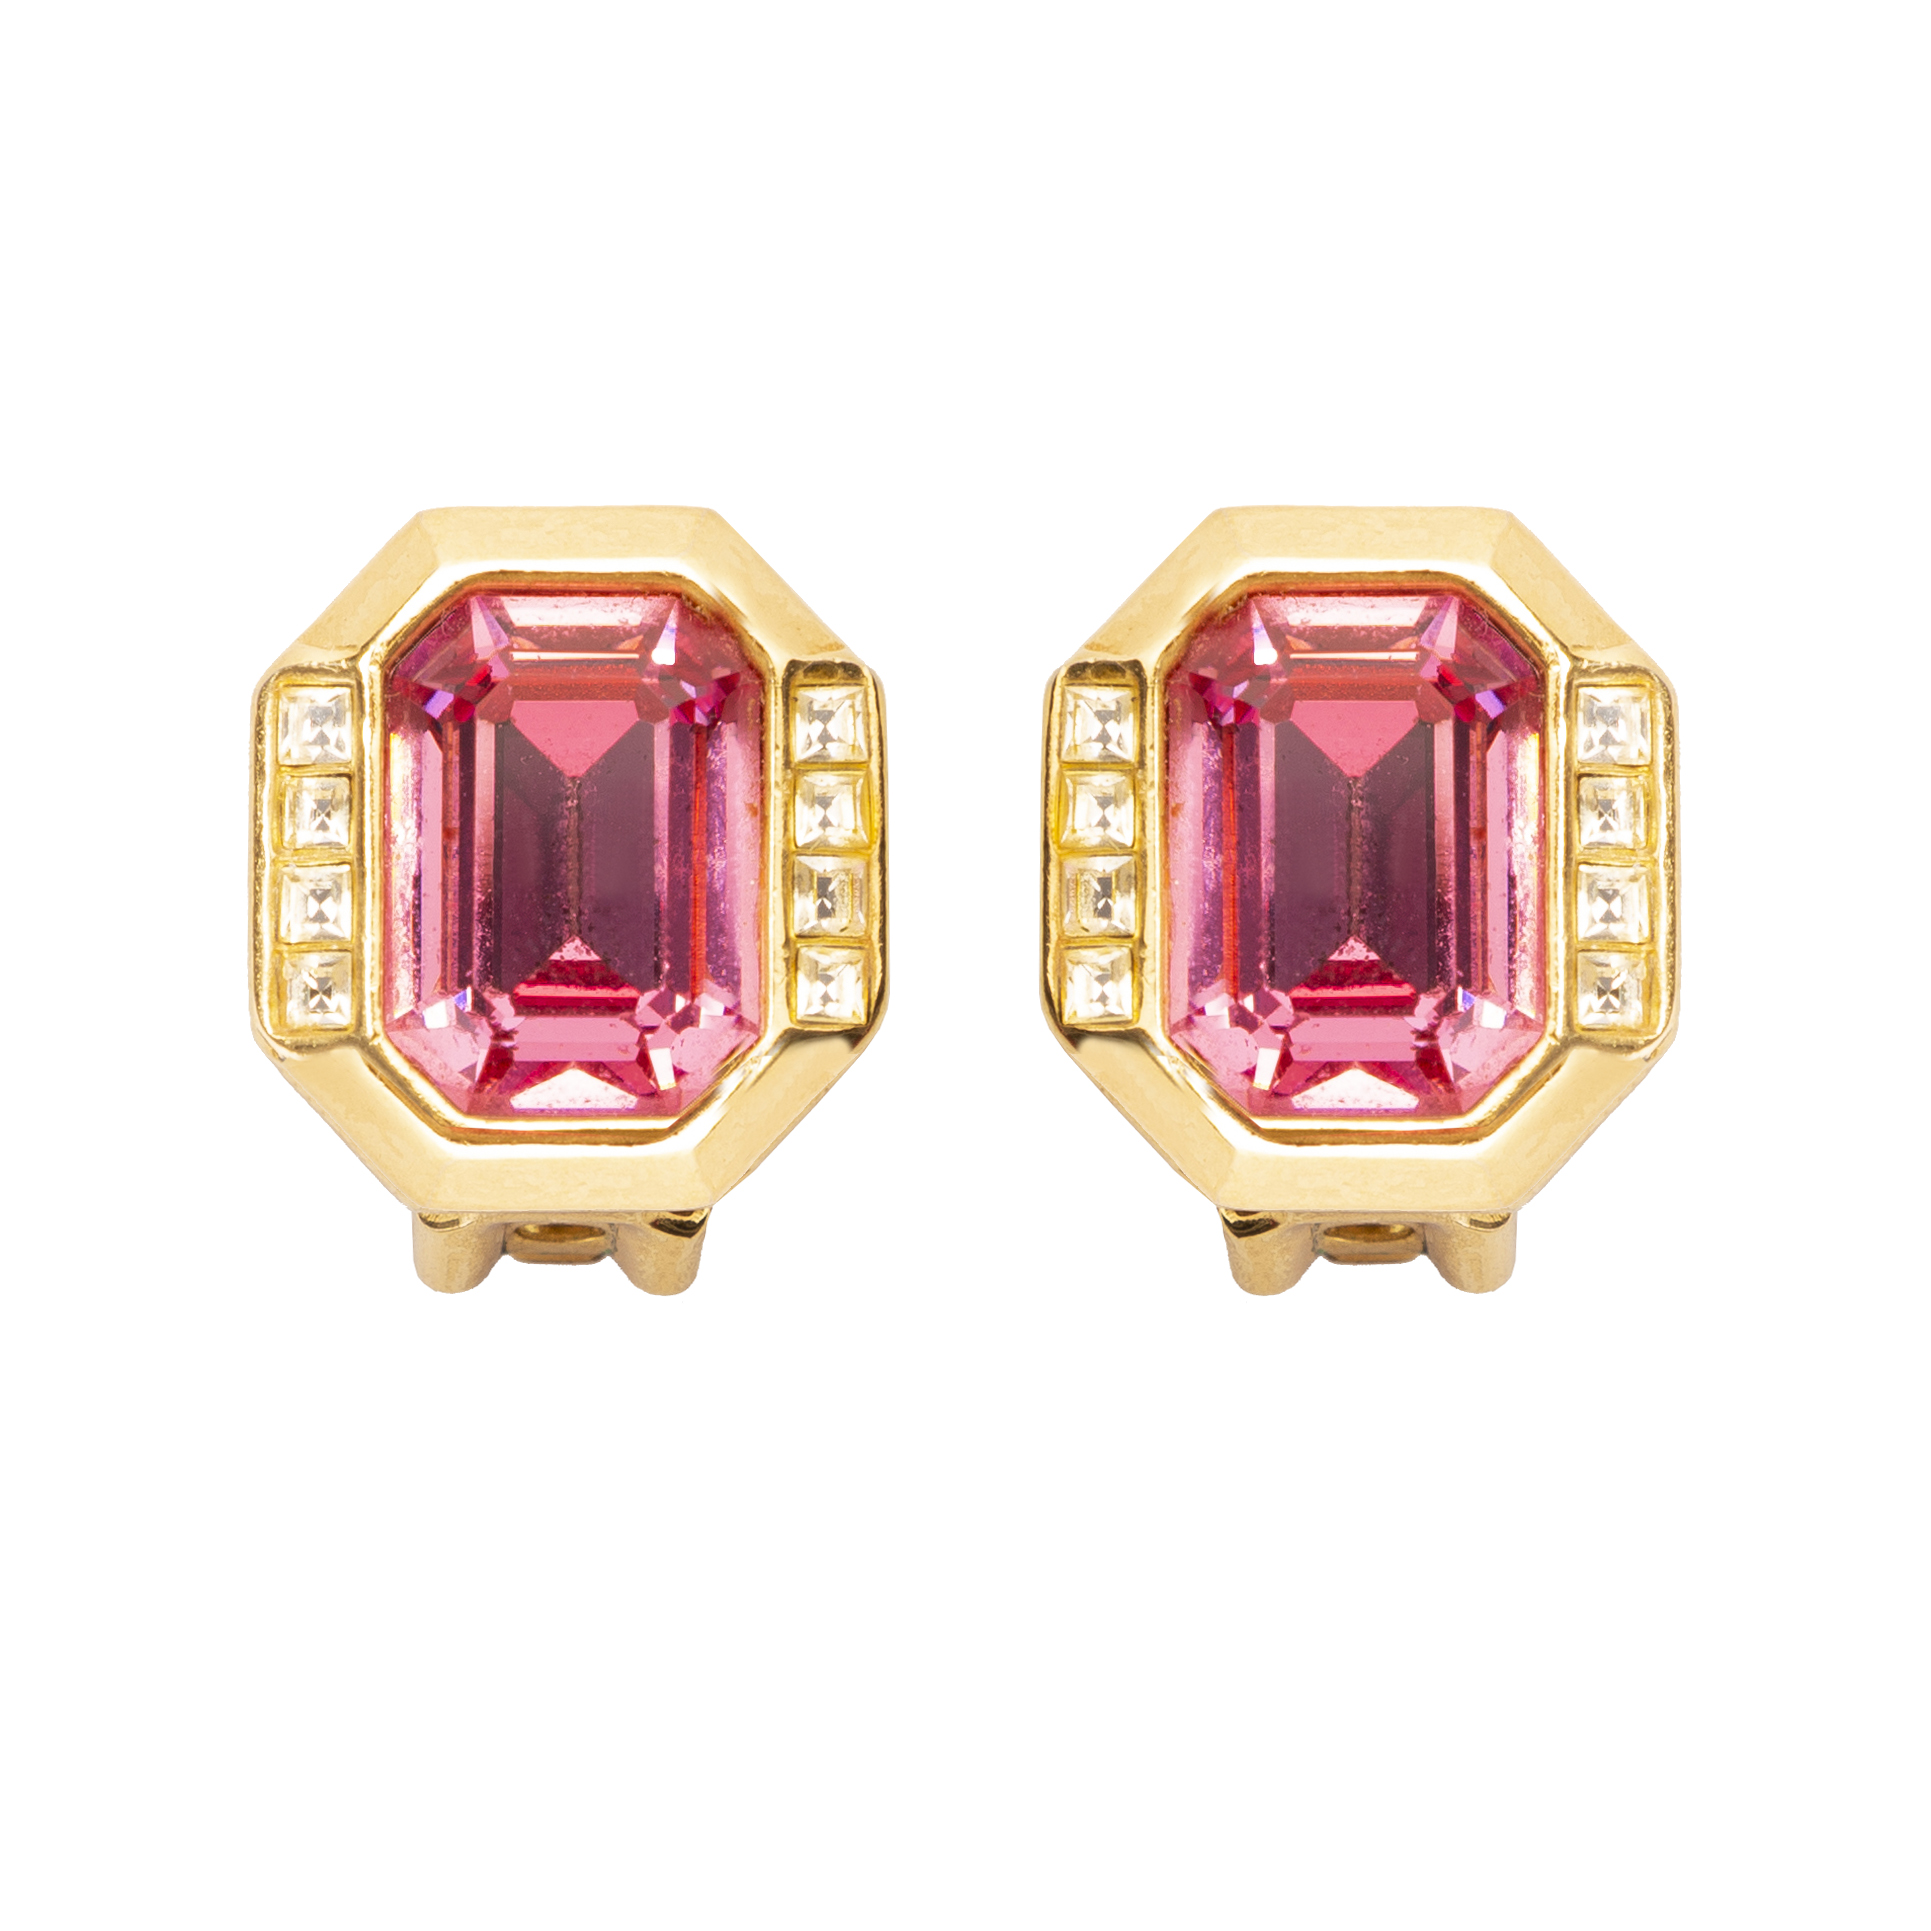 Vintage pink stone gold earrings